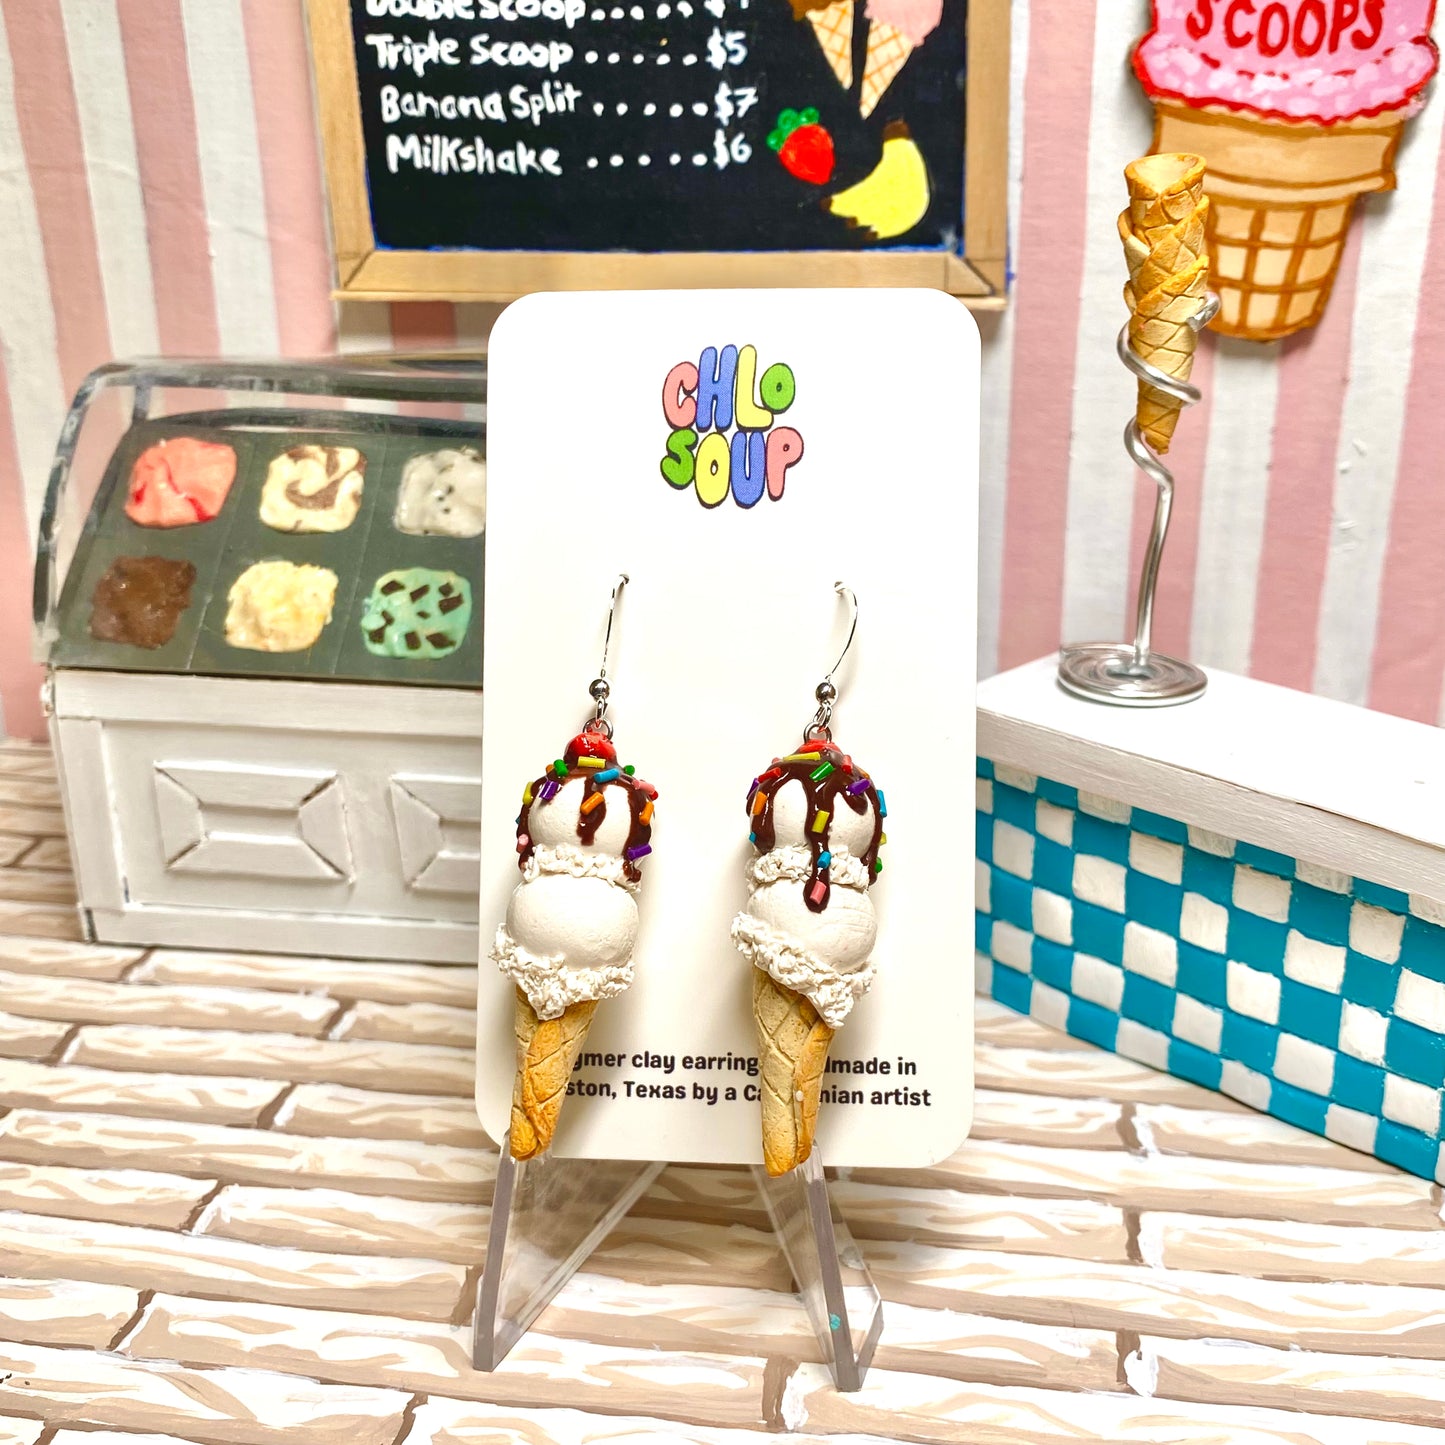 Double Scoop Traditional Sprinkle Ice Cream Earrings